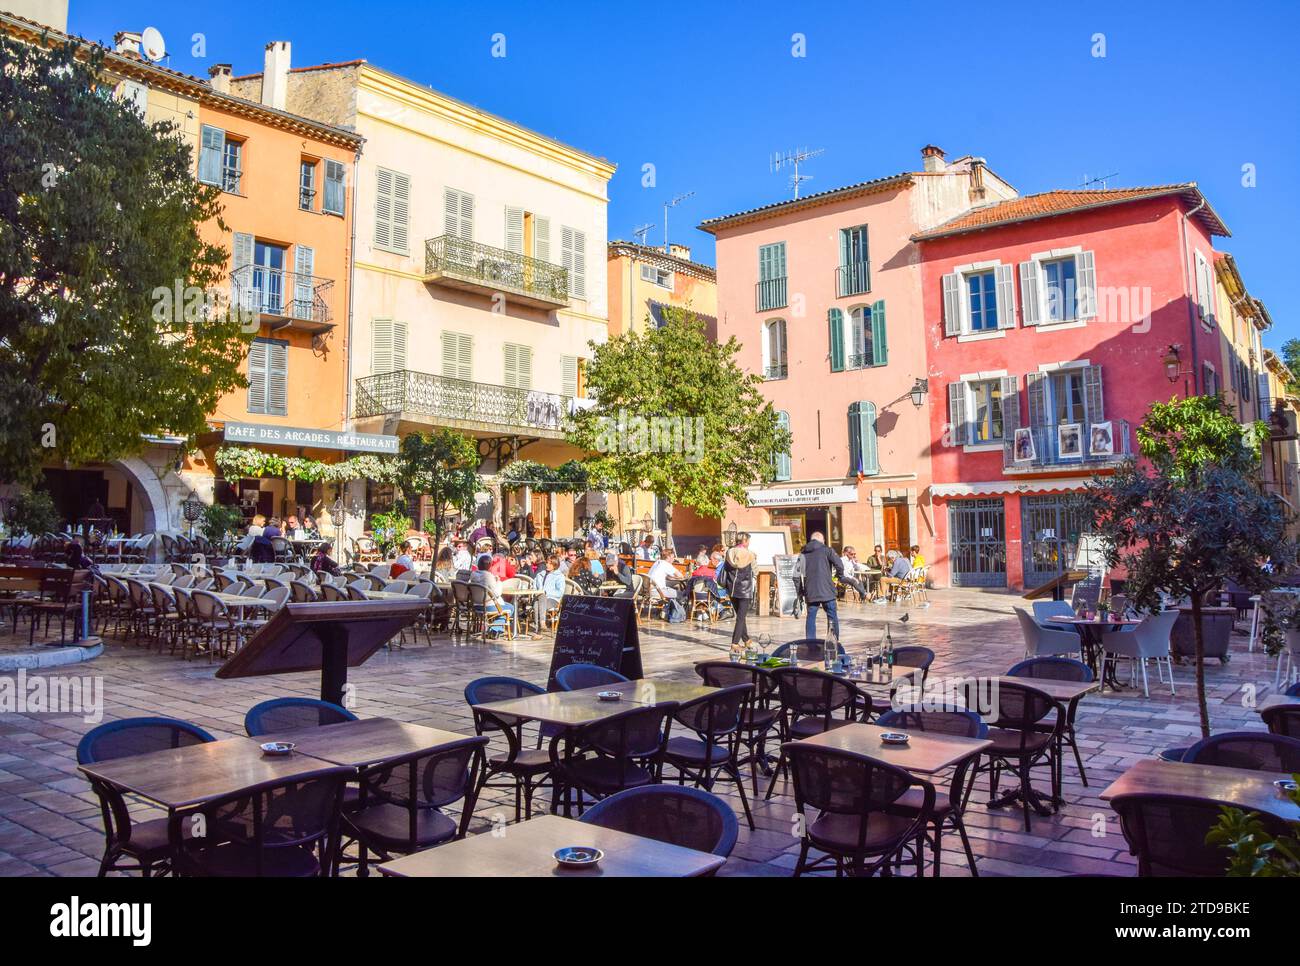 Valbonne, France. 6th November 2019. Place des Arcades town square in Valbonne Village, daytime view. Credit: Vuk Valcic/Alamy Stock Photo